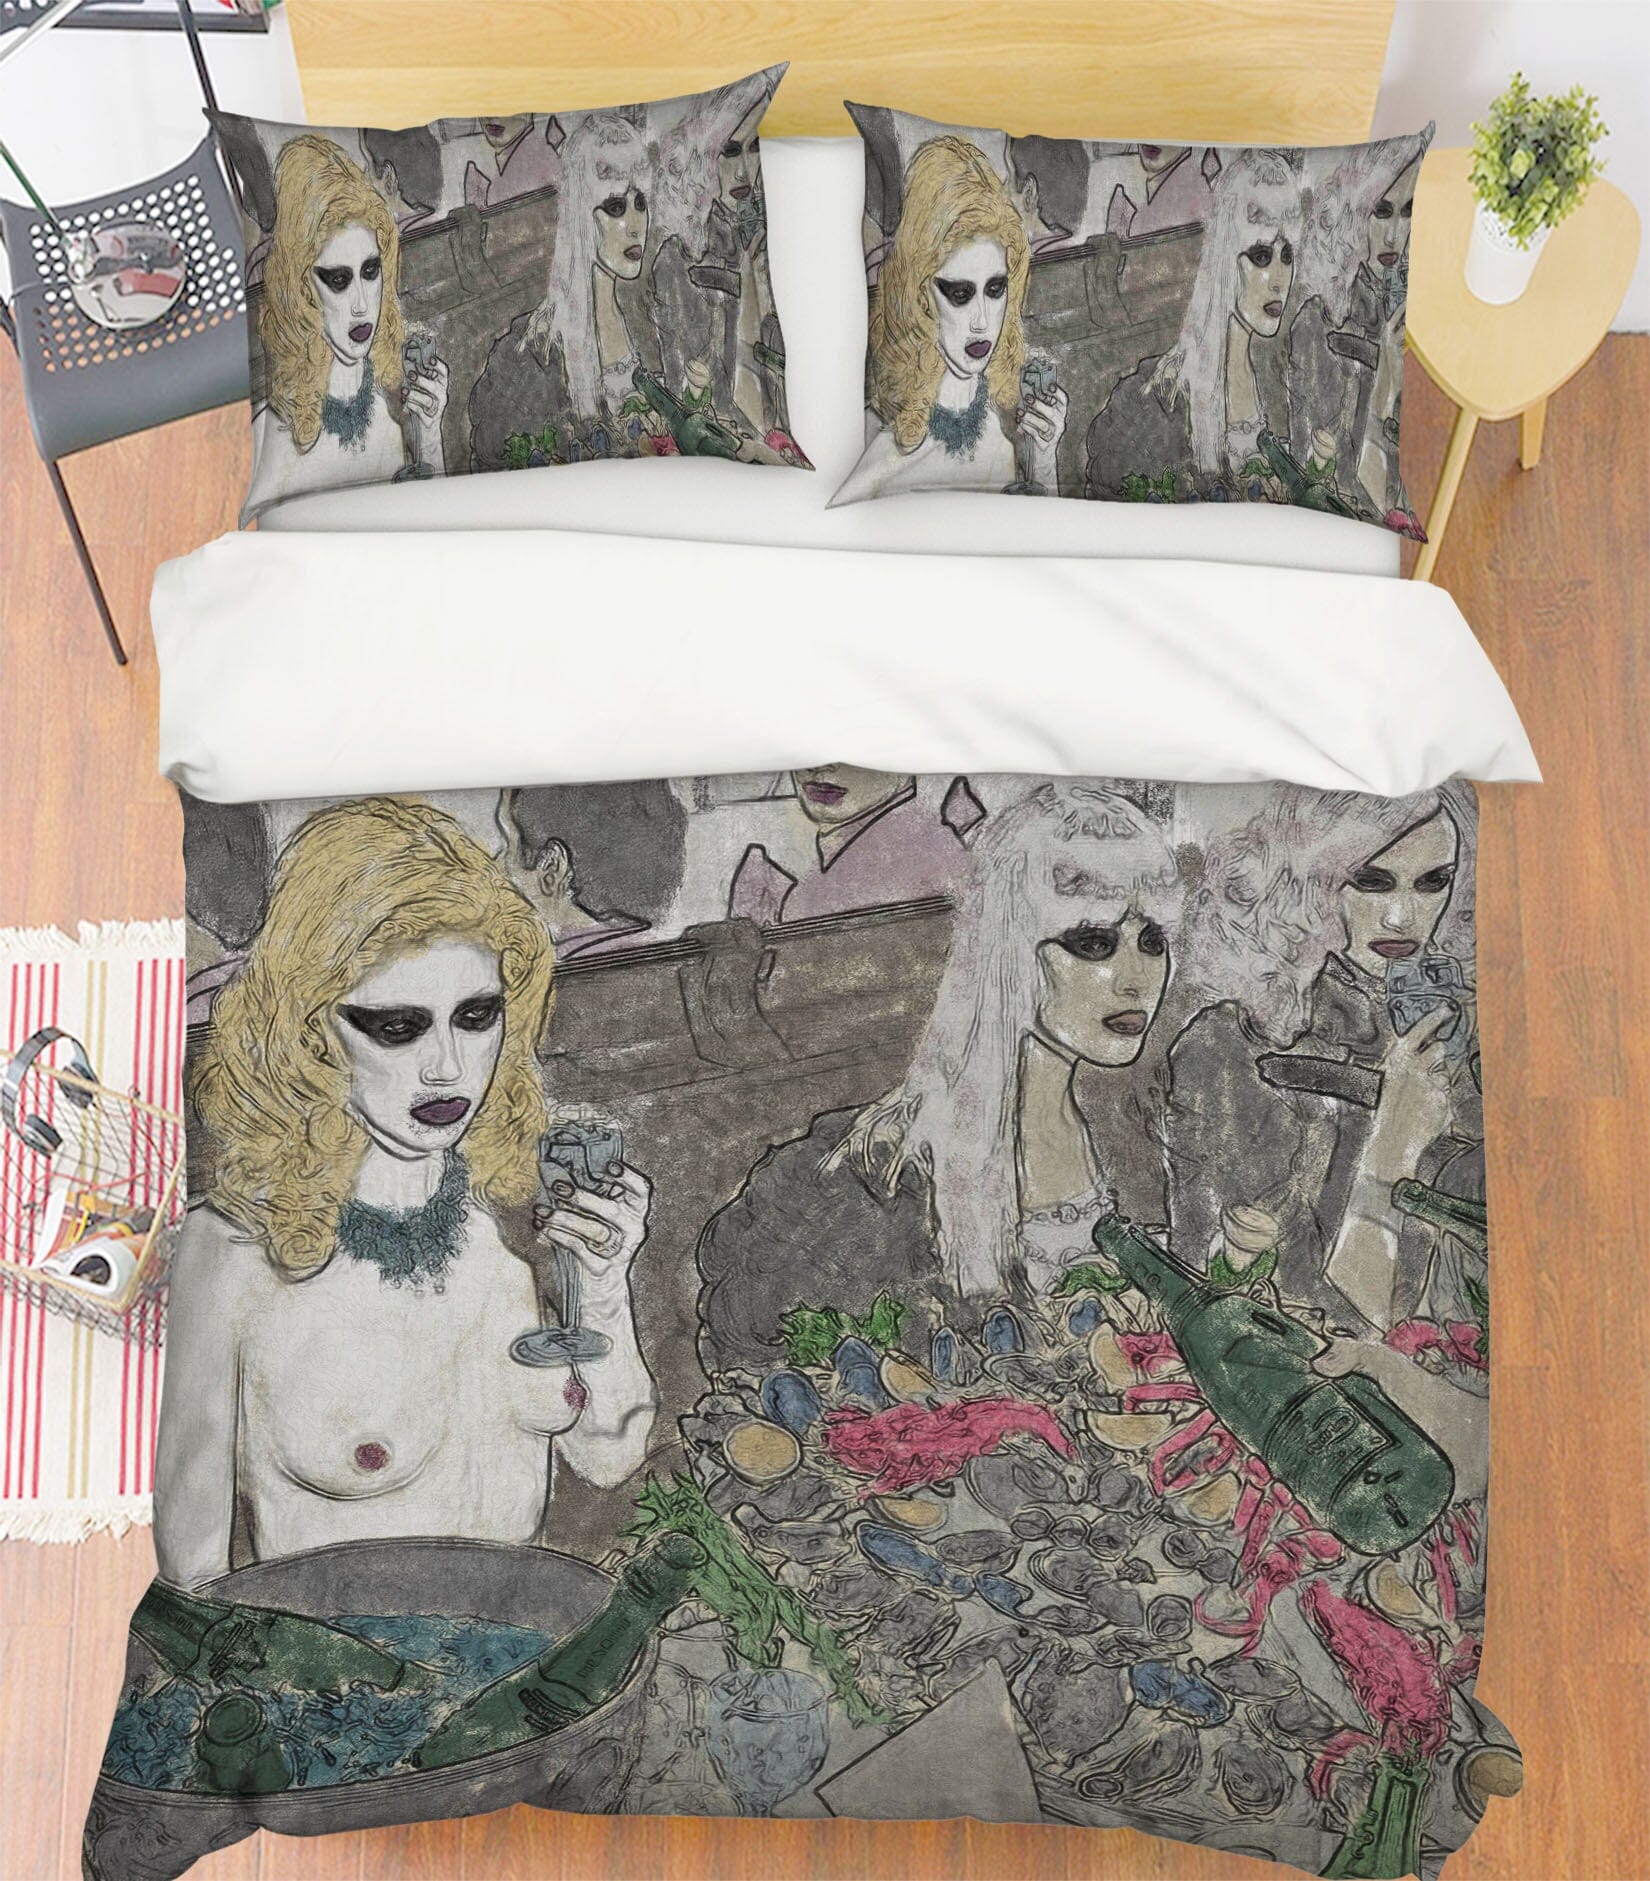 3D Girl Garden 2004 Marco Cavazzana Bedding Bed Pillowcases Quilt Quiet Covers AJ Creativity Home 